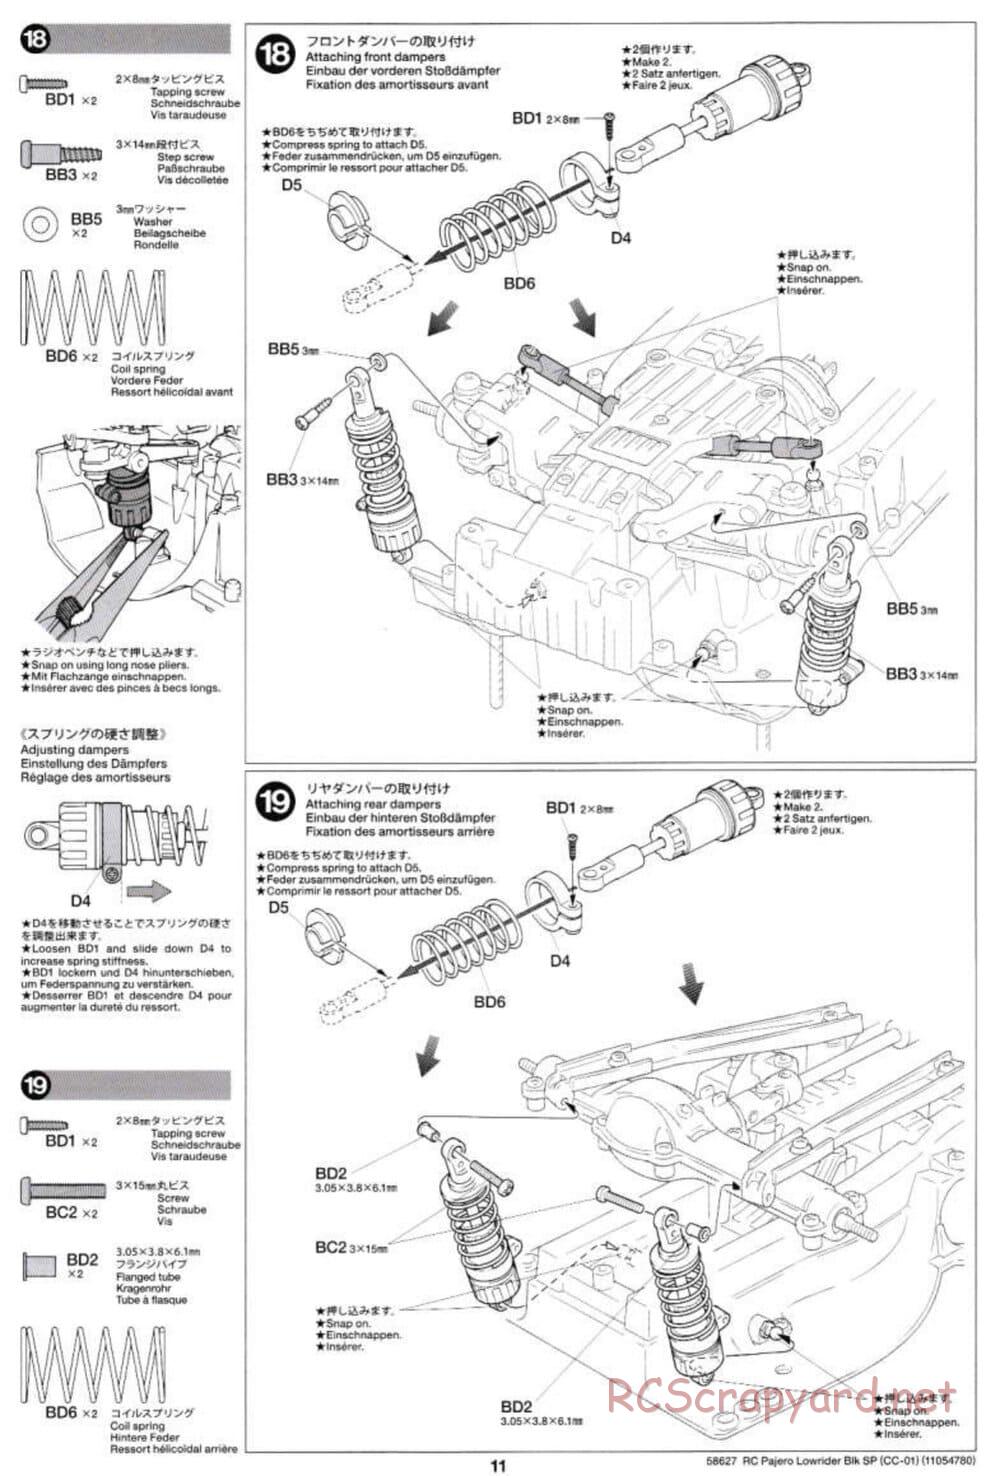 Tamiya - Mitsubishi Pajero Custom Lowrider Black Special - CC-01 Chassis - Manual - Page 11